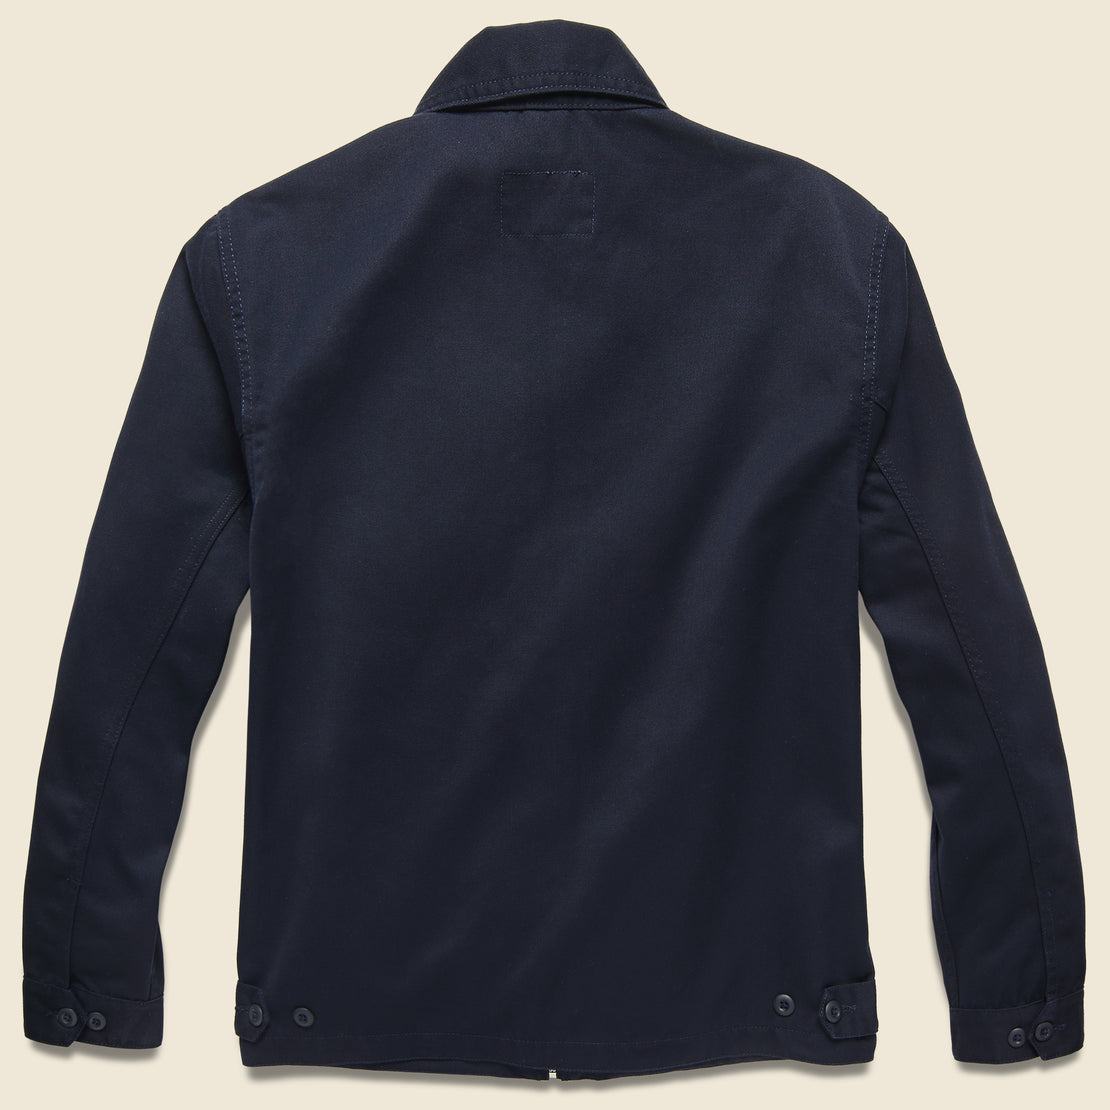 Modular Jacket - Dark Navy - Carhartt WIP - STAG Provisions - Outerwear - Coat / Jacket